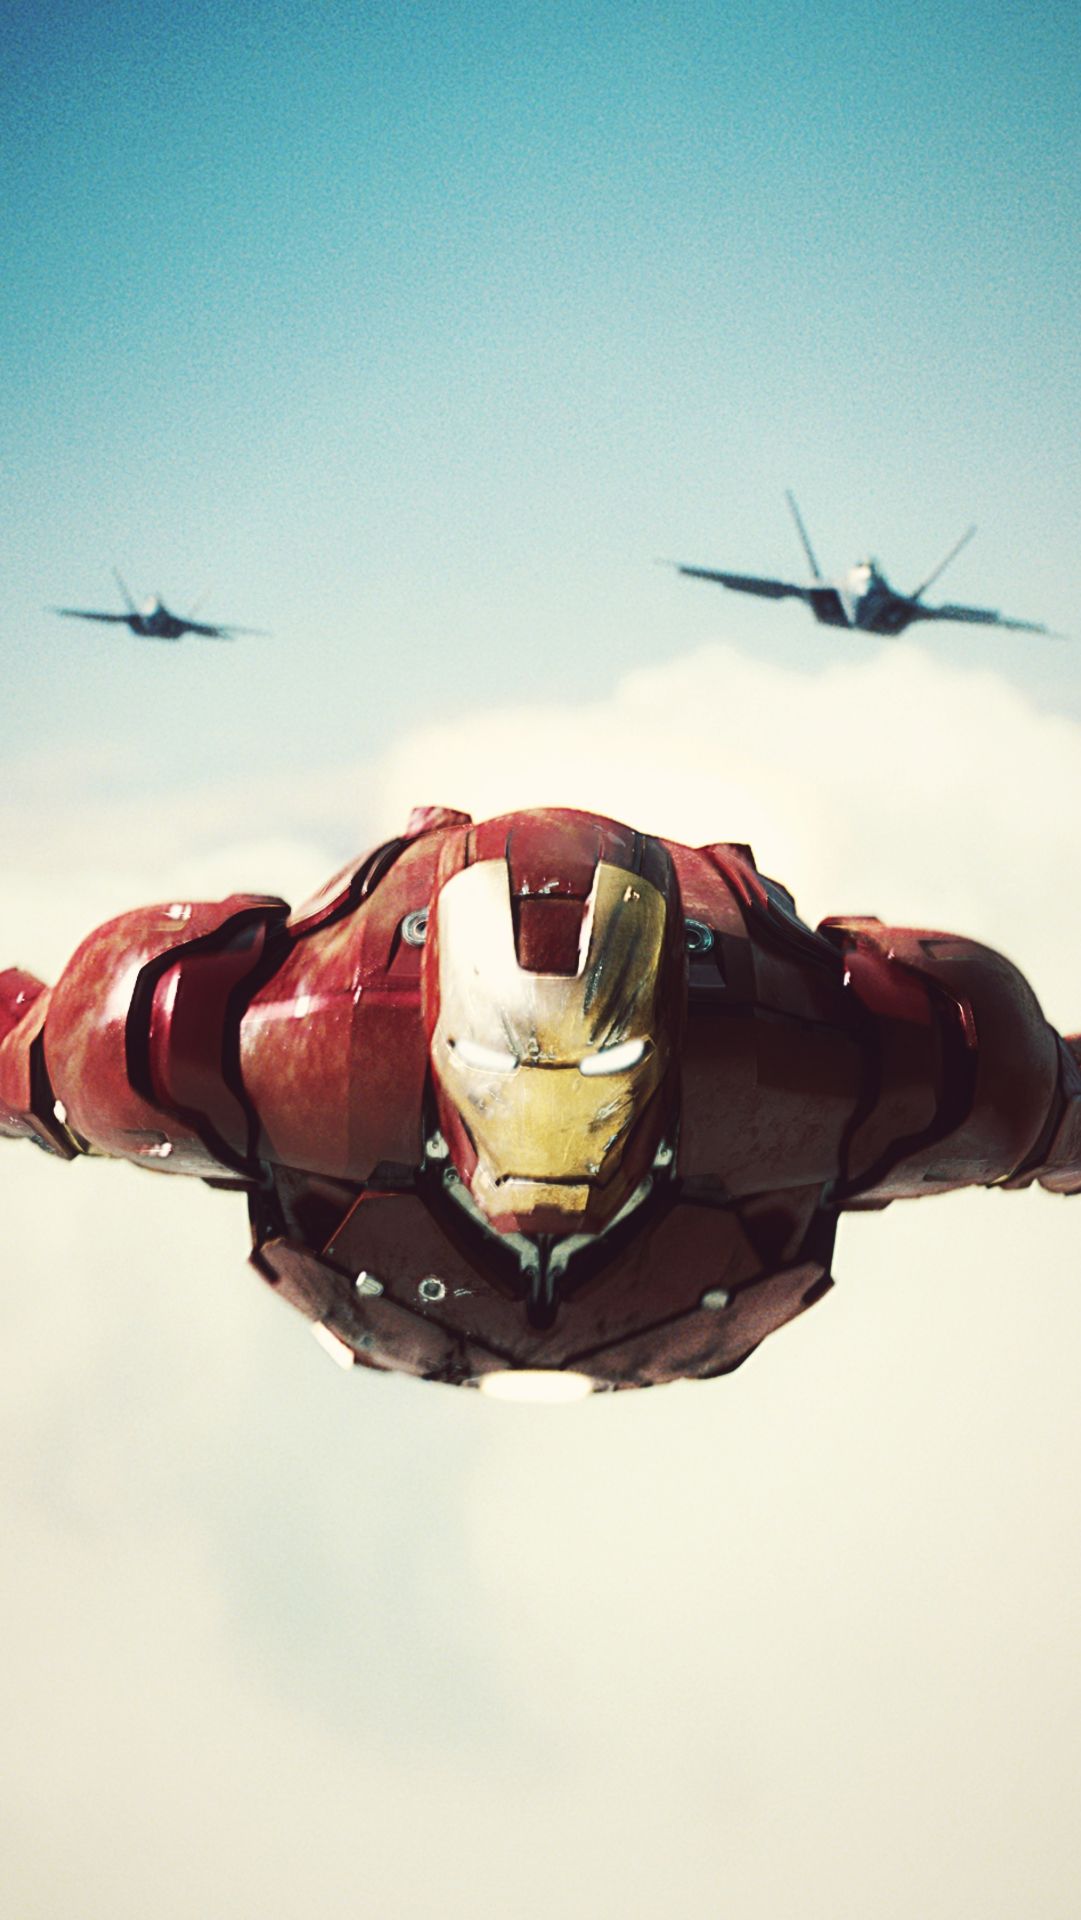 iPhone Wallpaper for iPhone iPhone X and iPhone 7. Marvel iron man, Iron man avengers, Iron man comic